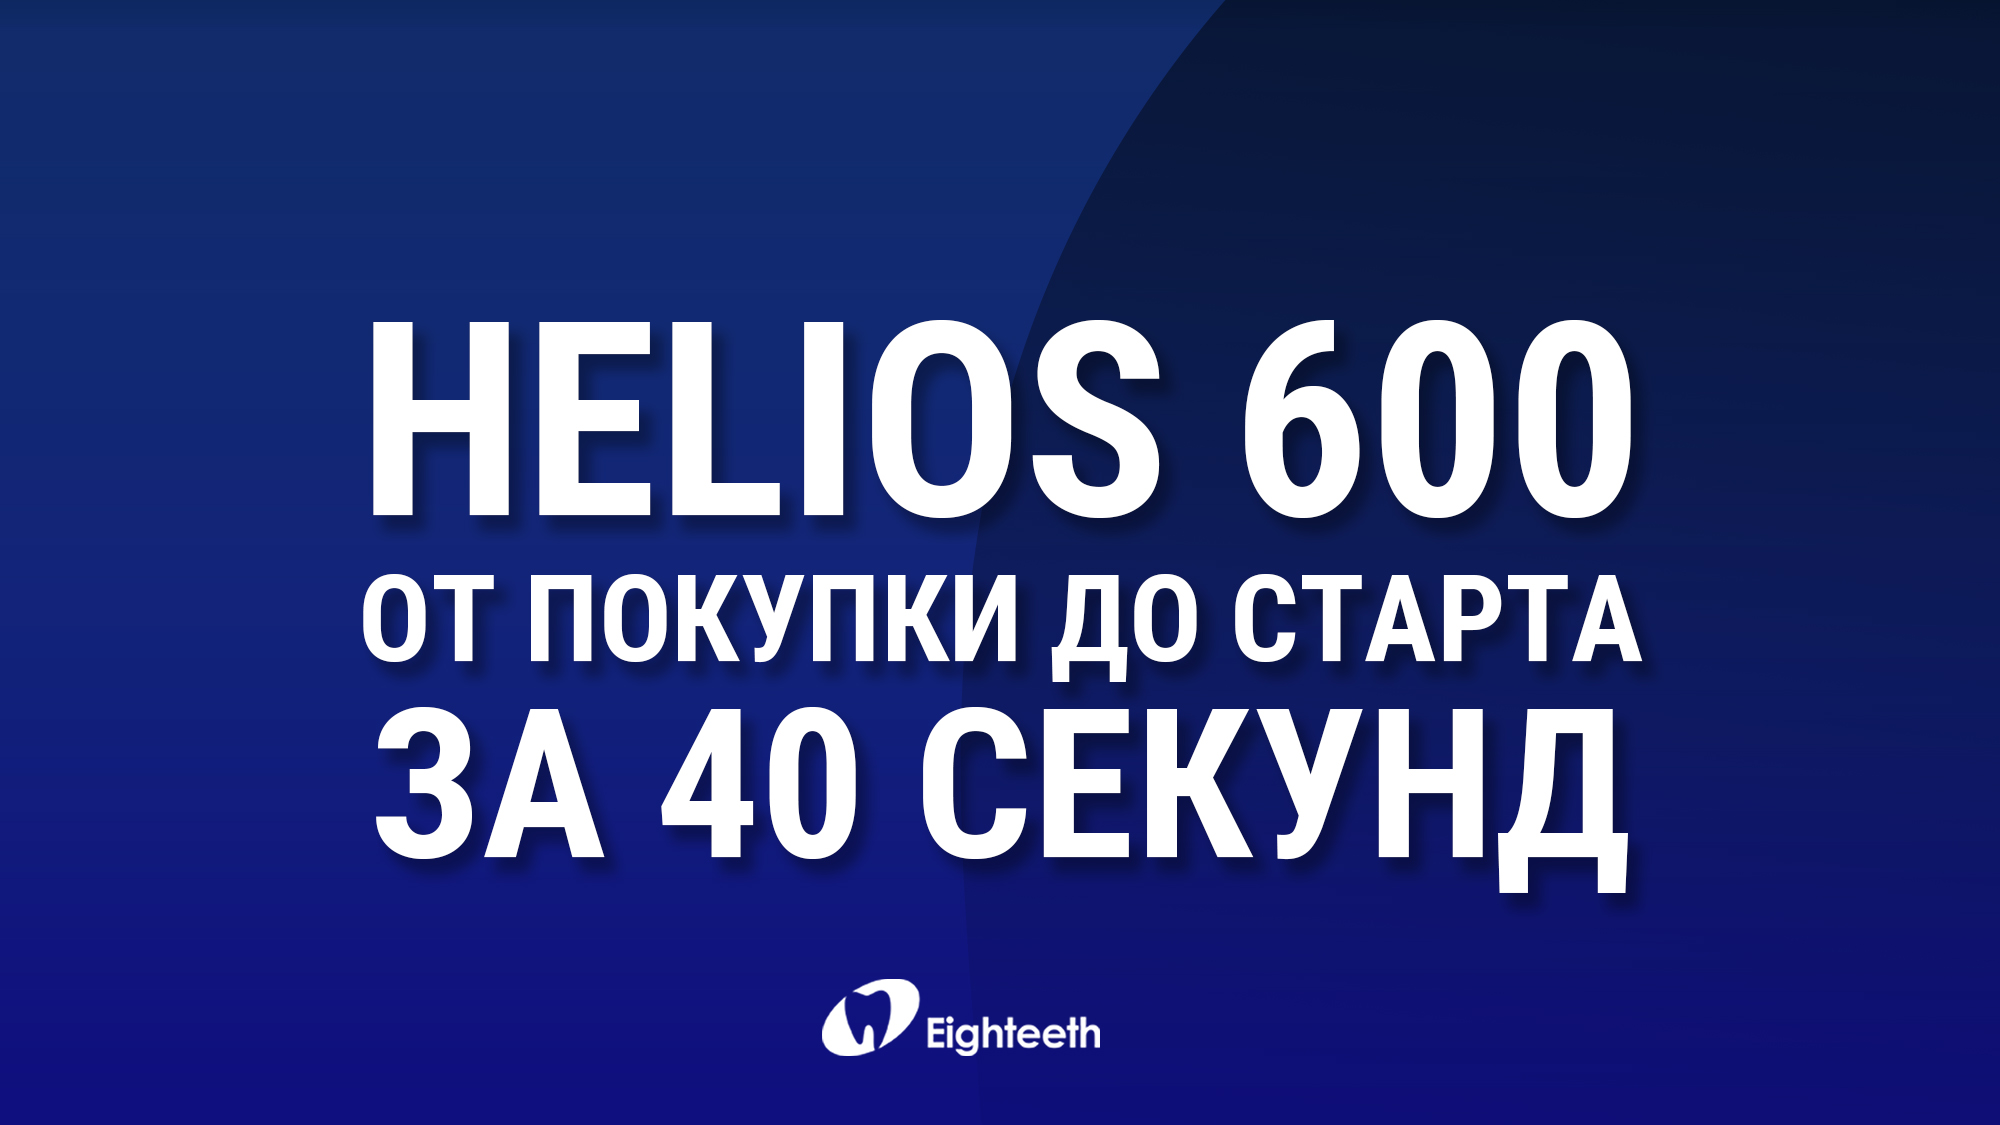 Helios 600 - от покупки до работы за 40 секунд